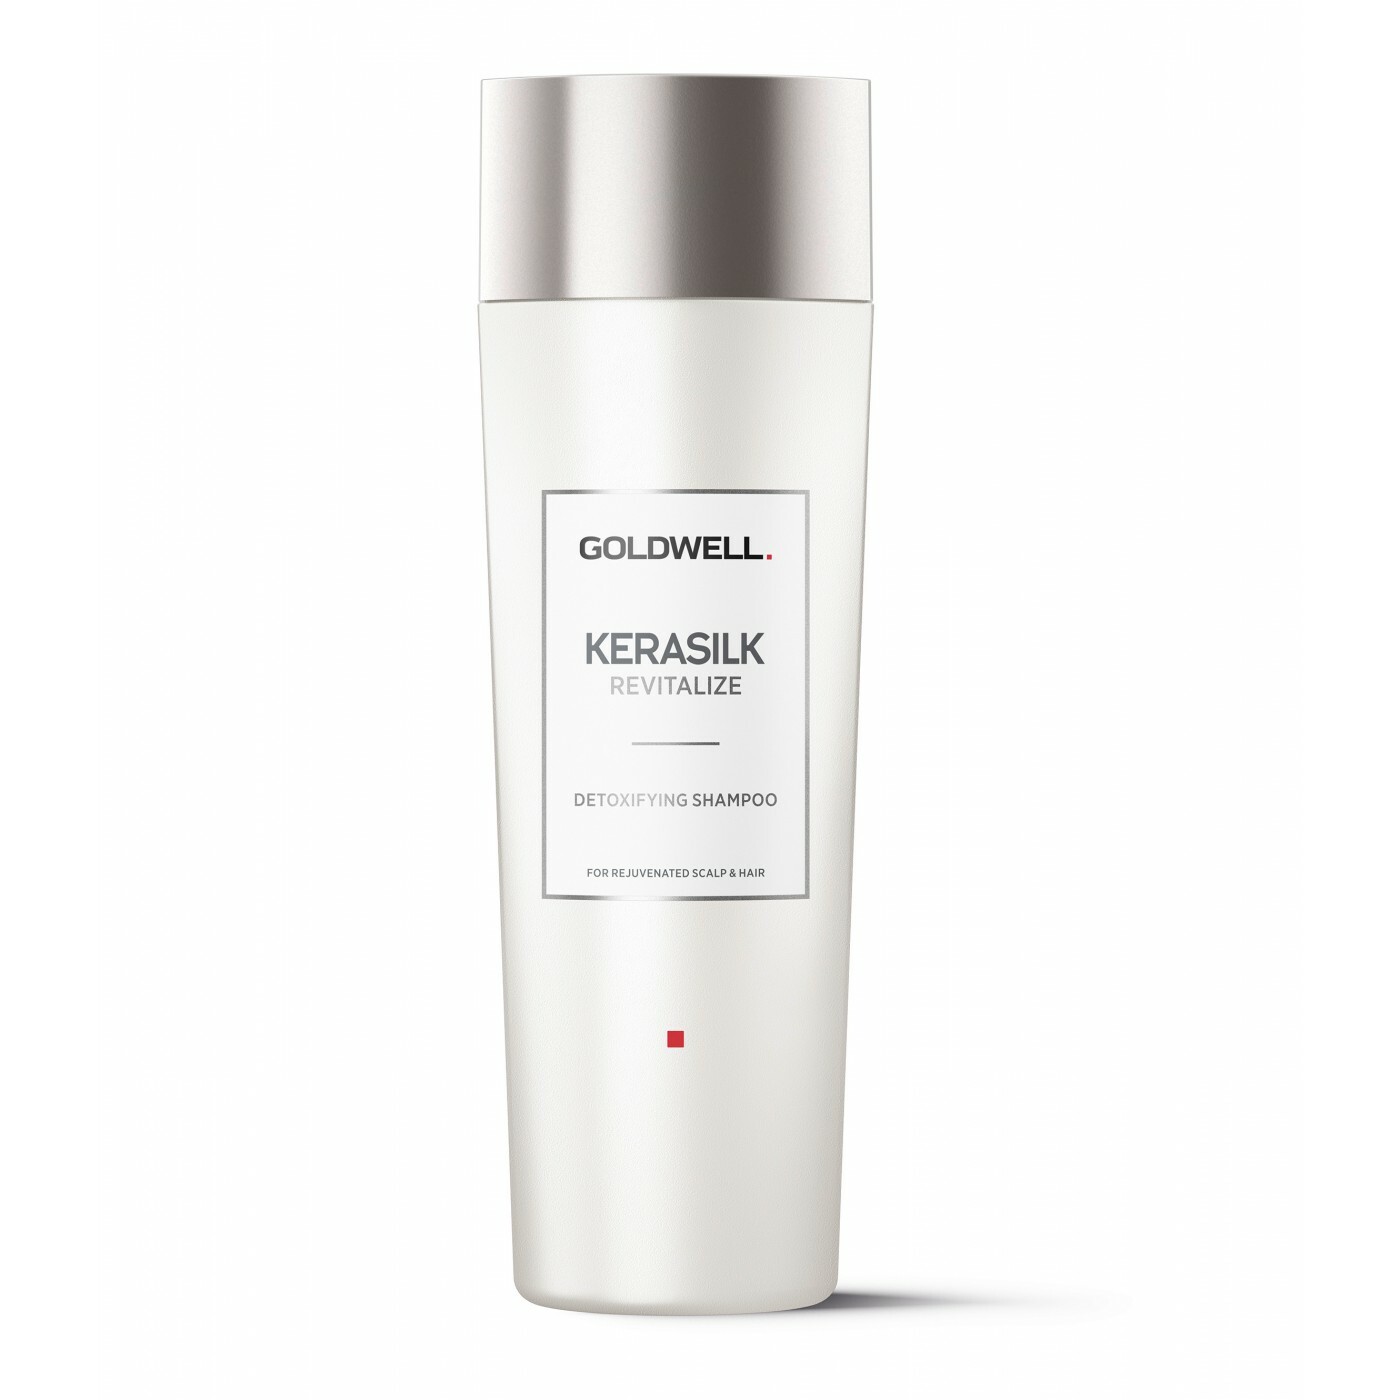 GOLDWELL Kerasilk Revitalize Detoxifying Shampoo 250ml